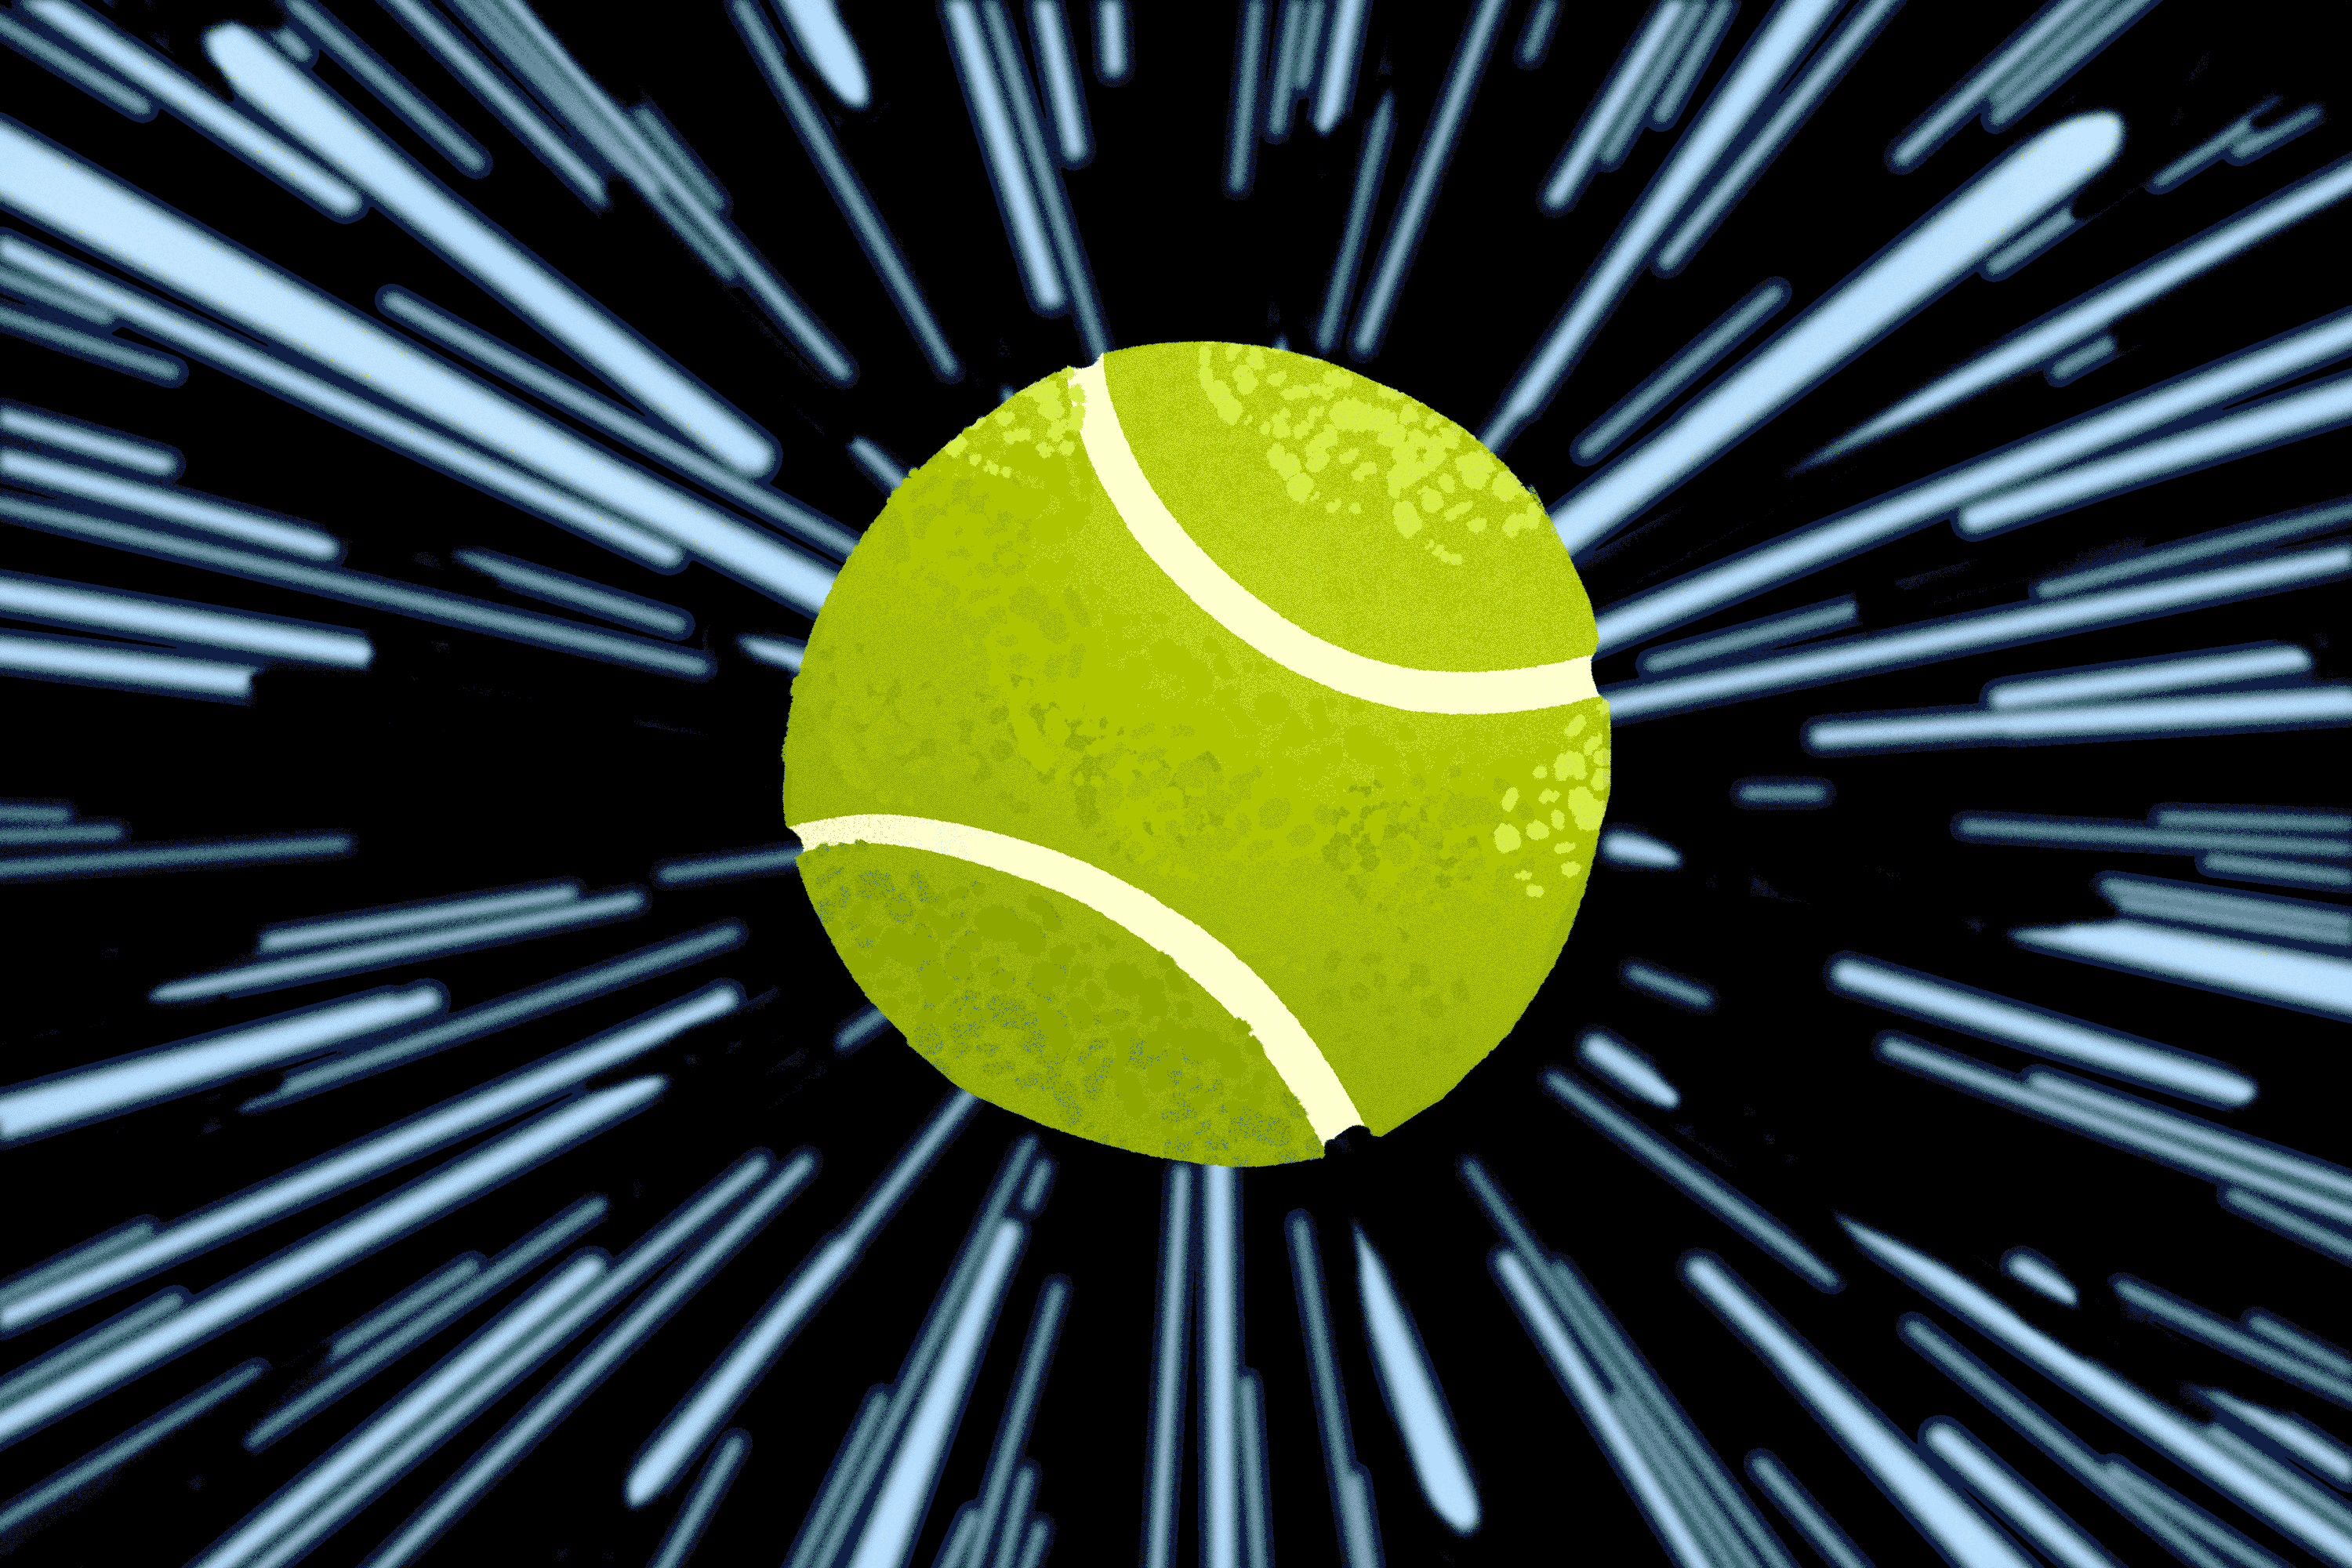 An animation of a rotating tennis ball